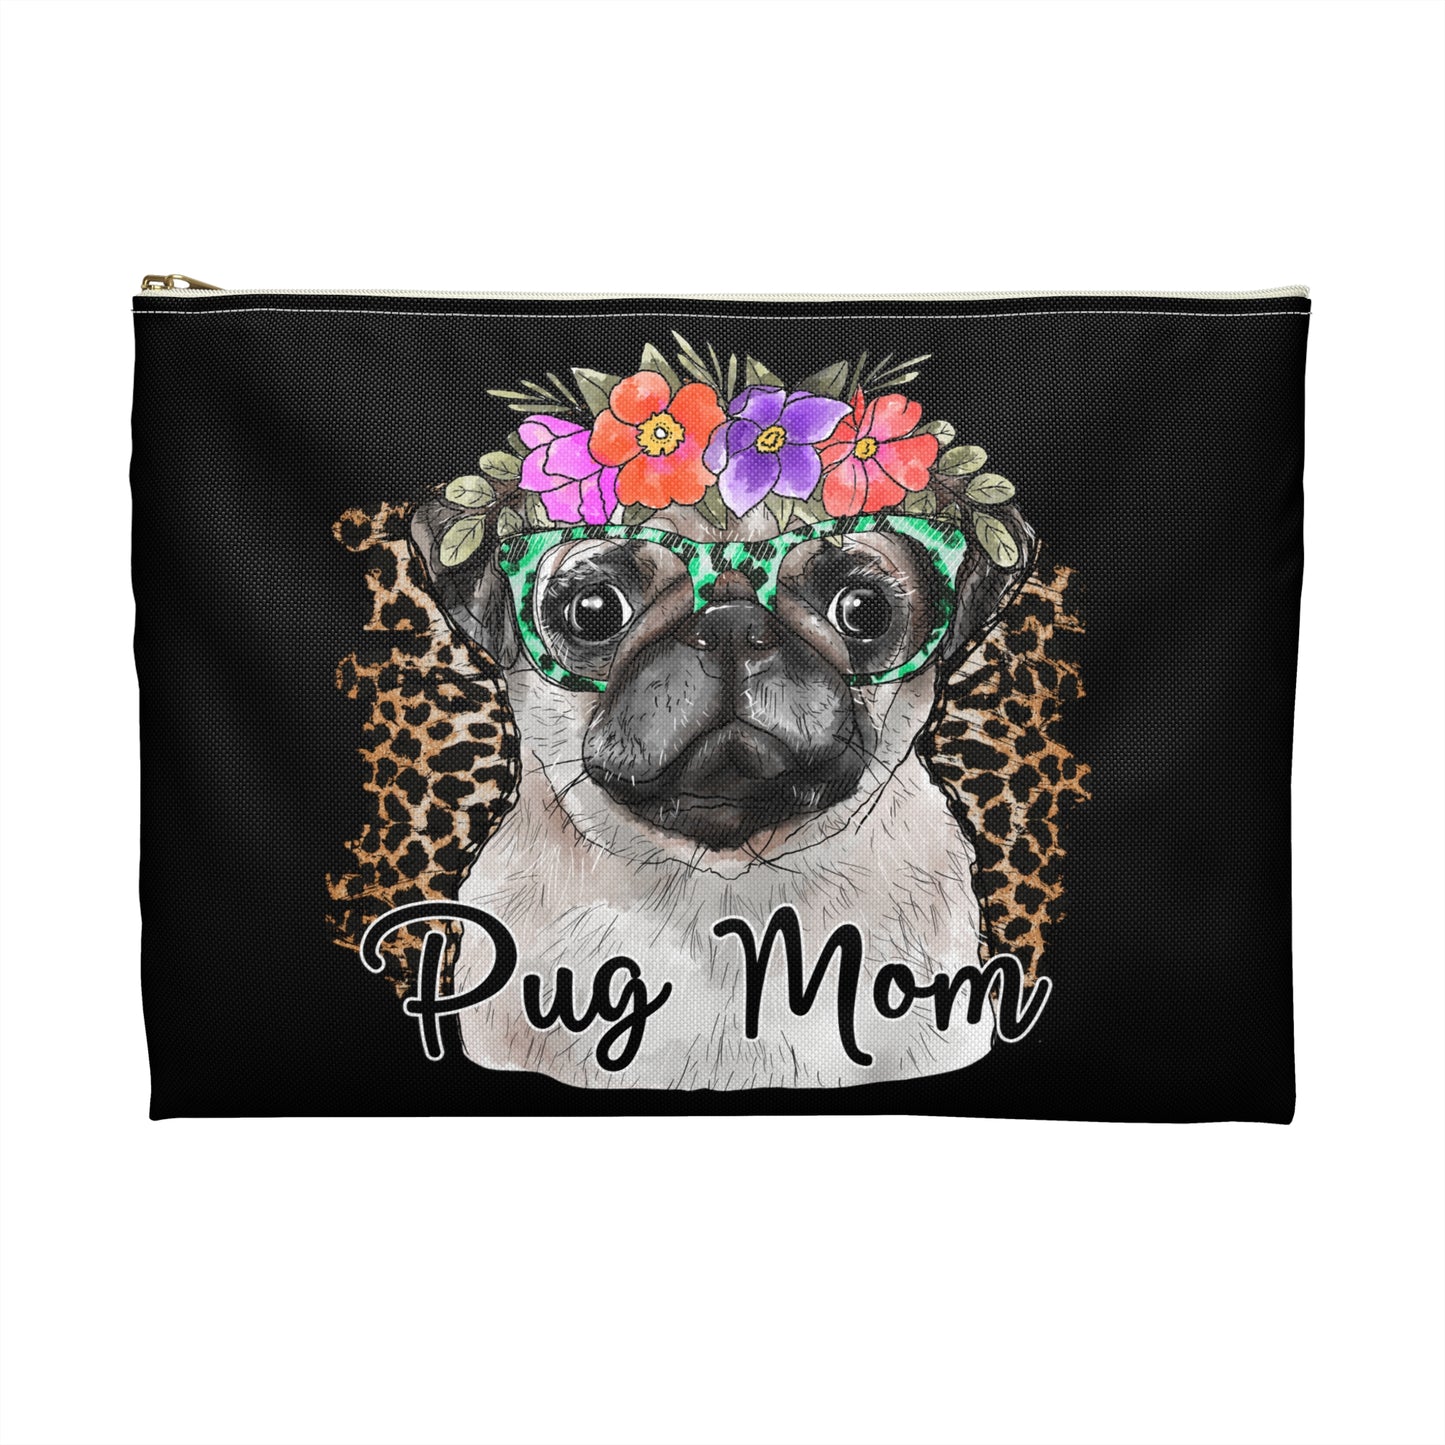 Pug Mom Accessory Pouch Make Up Bag